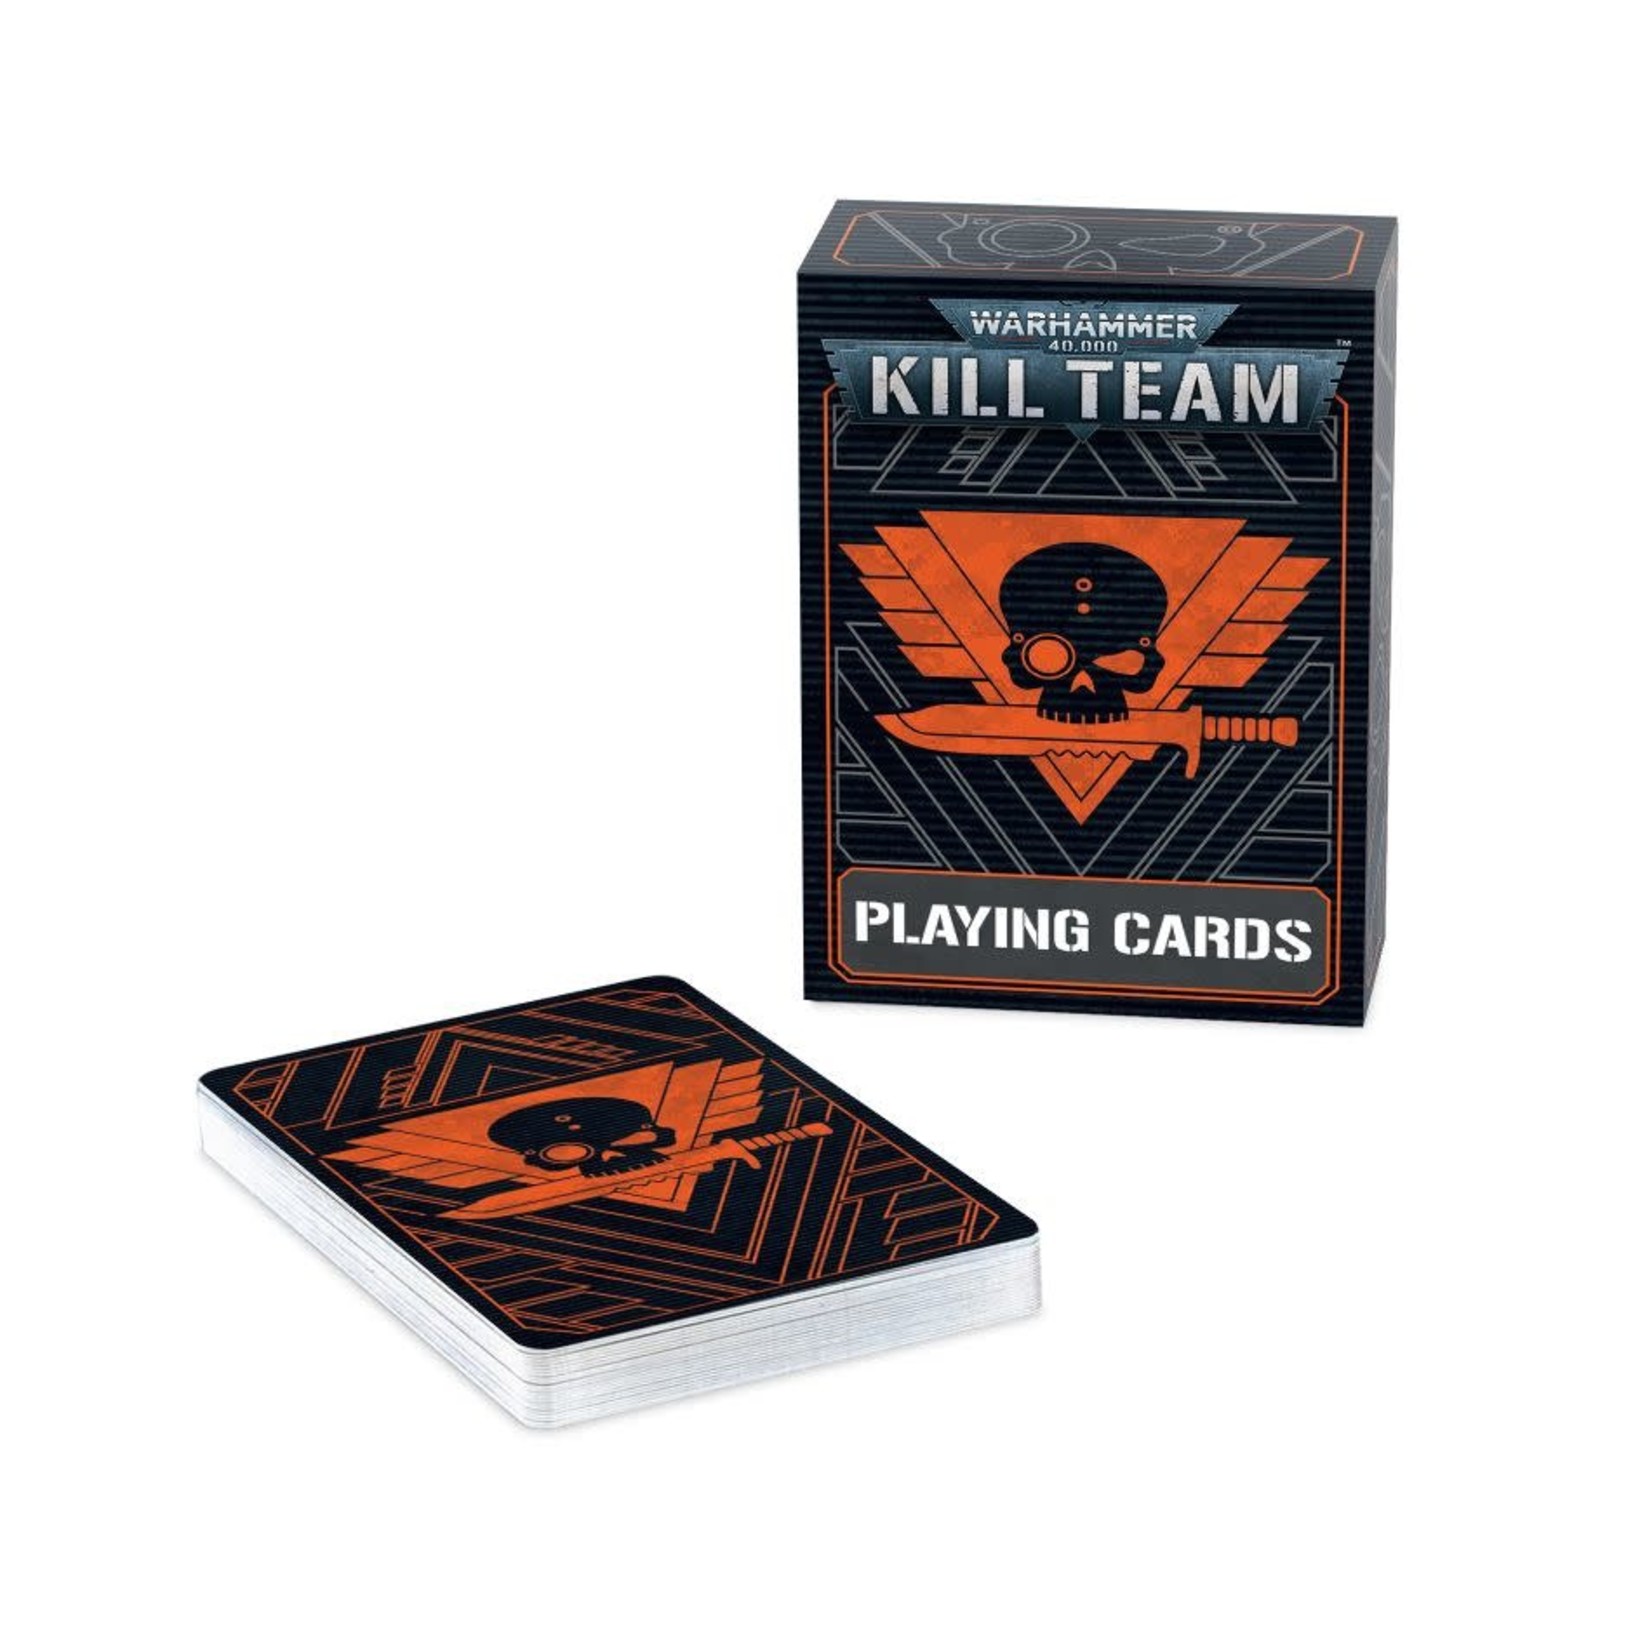 Warhammer 40K Kill Team Playing Cards